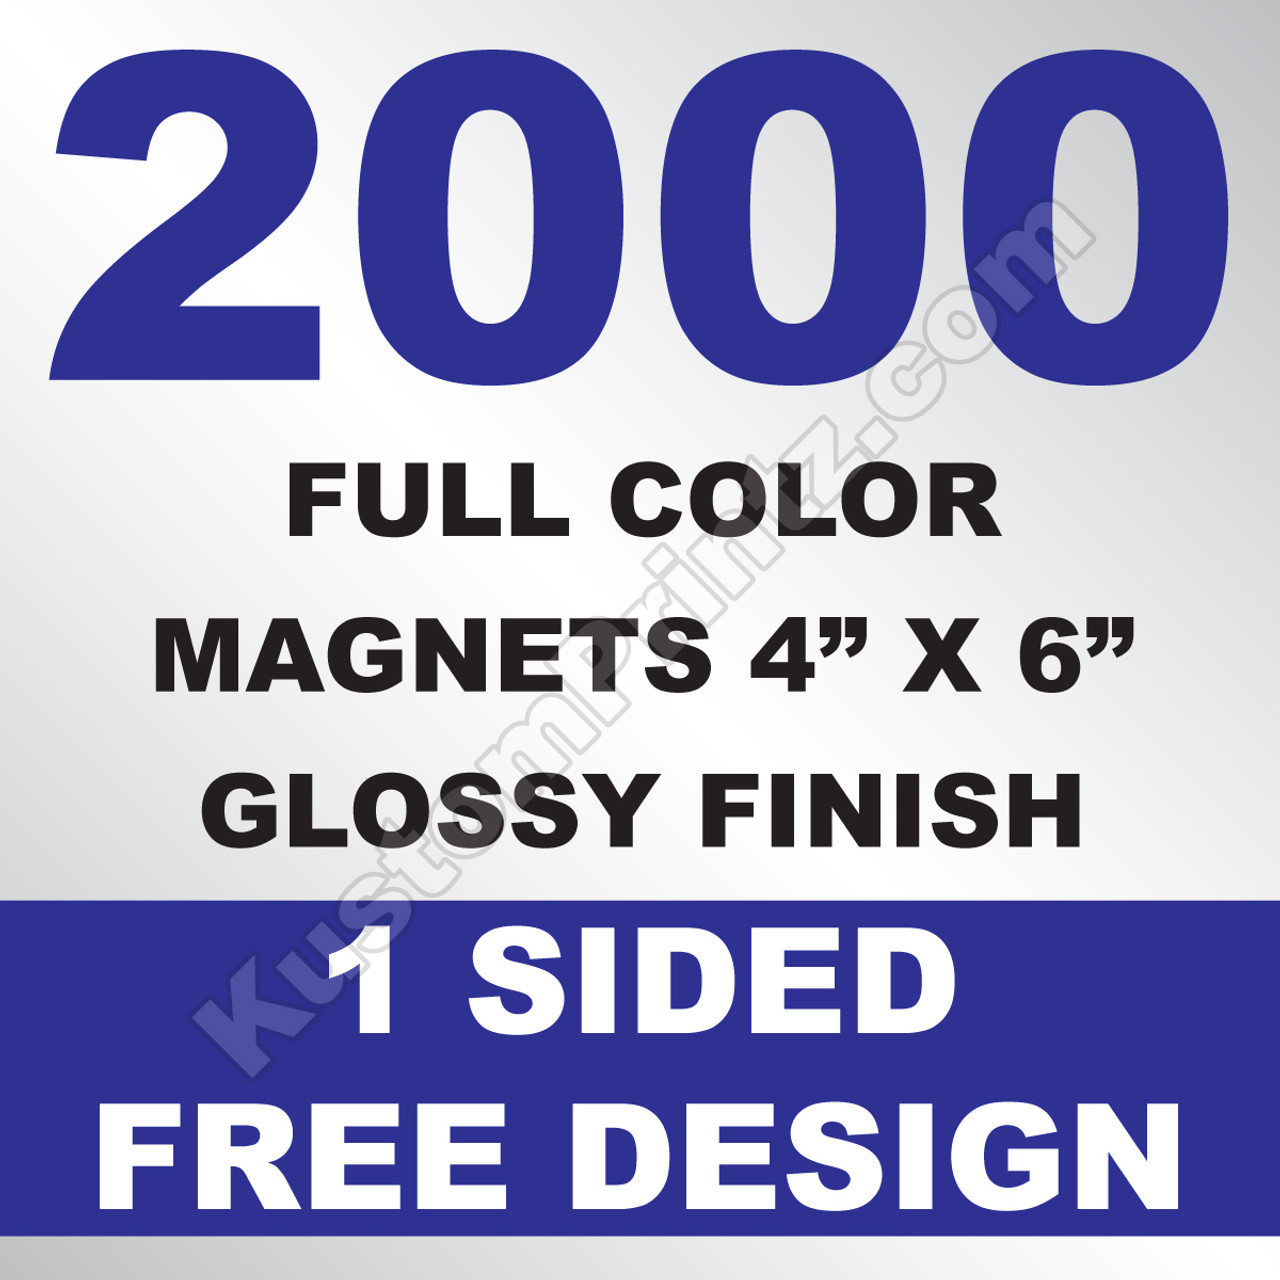 2000 Magnets 4x6